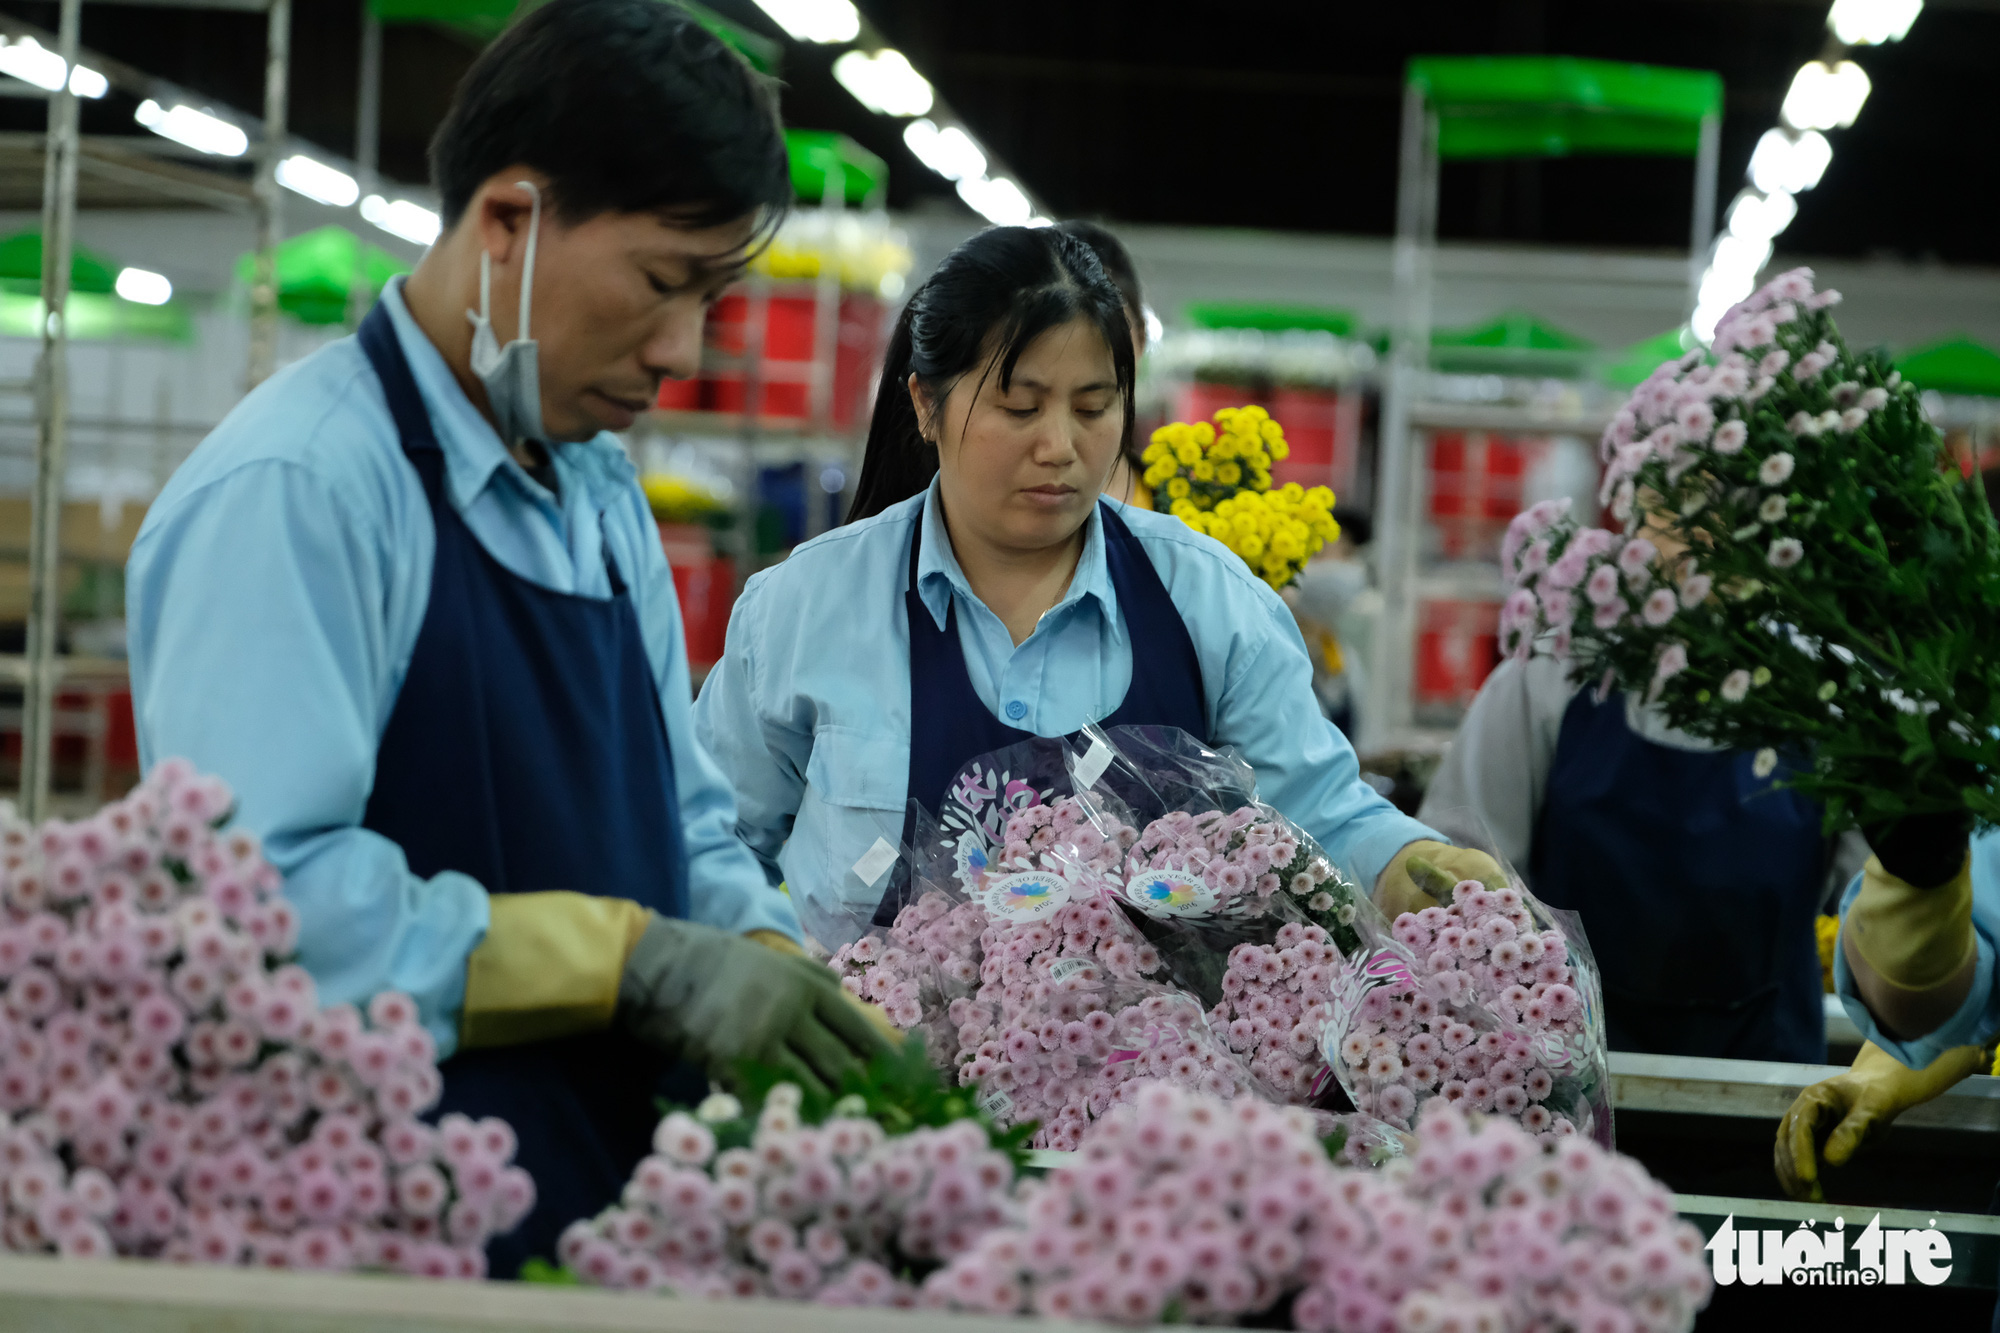 Vietnam’s Central Highlands province builds first flower trading center